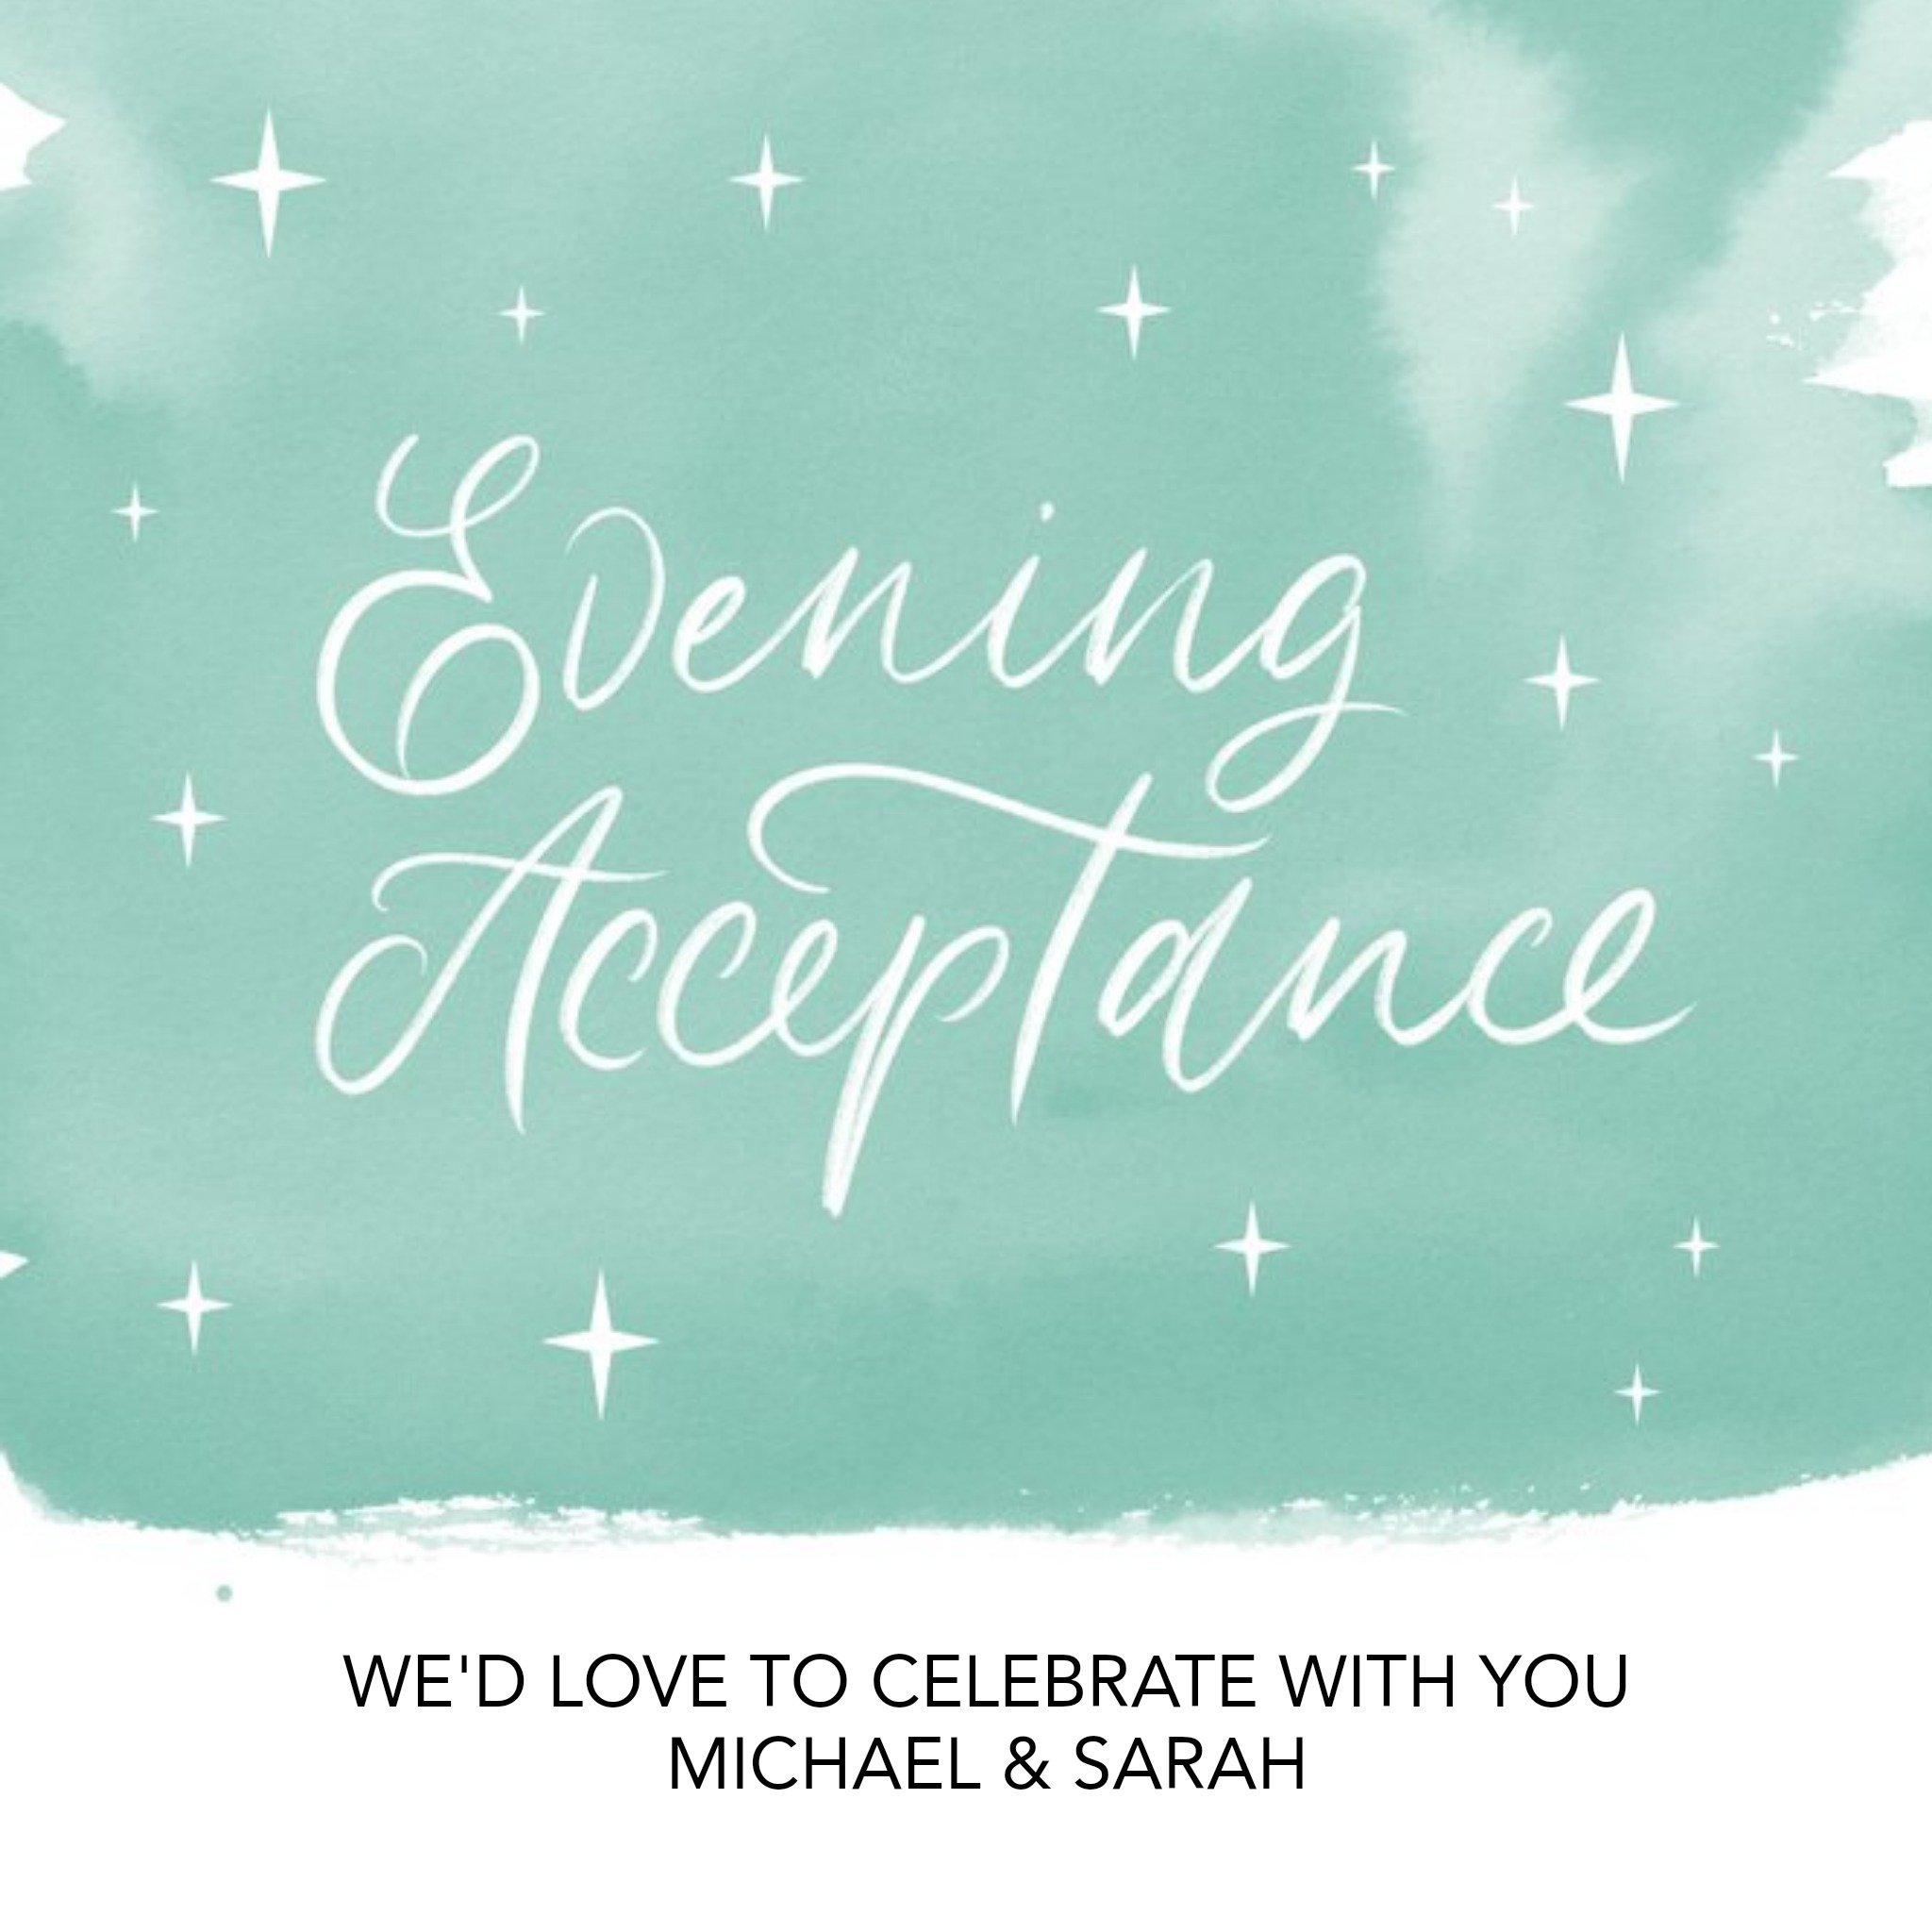 Moonpig Modern Typographic Evening Acceptance Wedding Card, Square